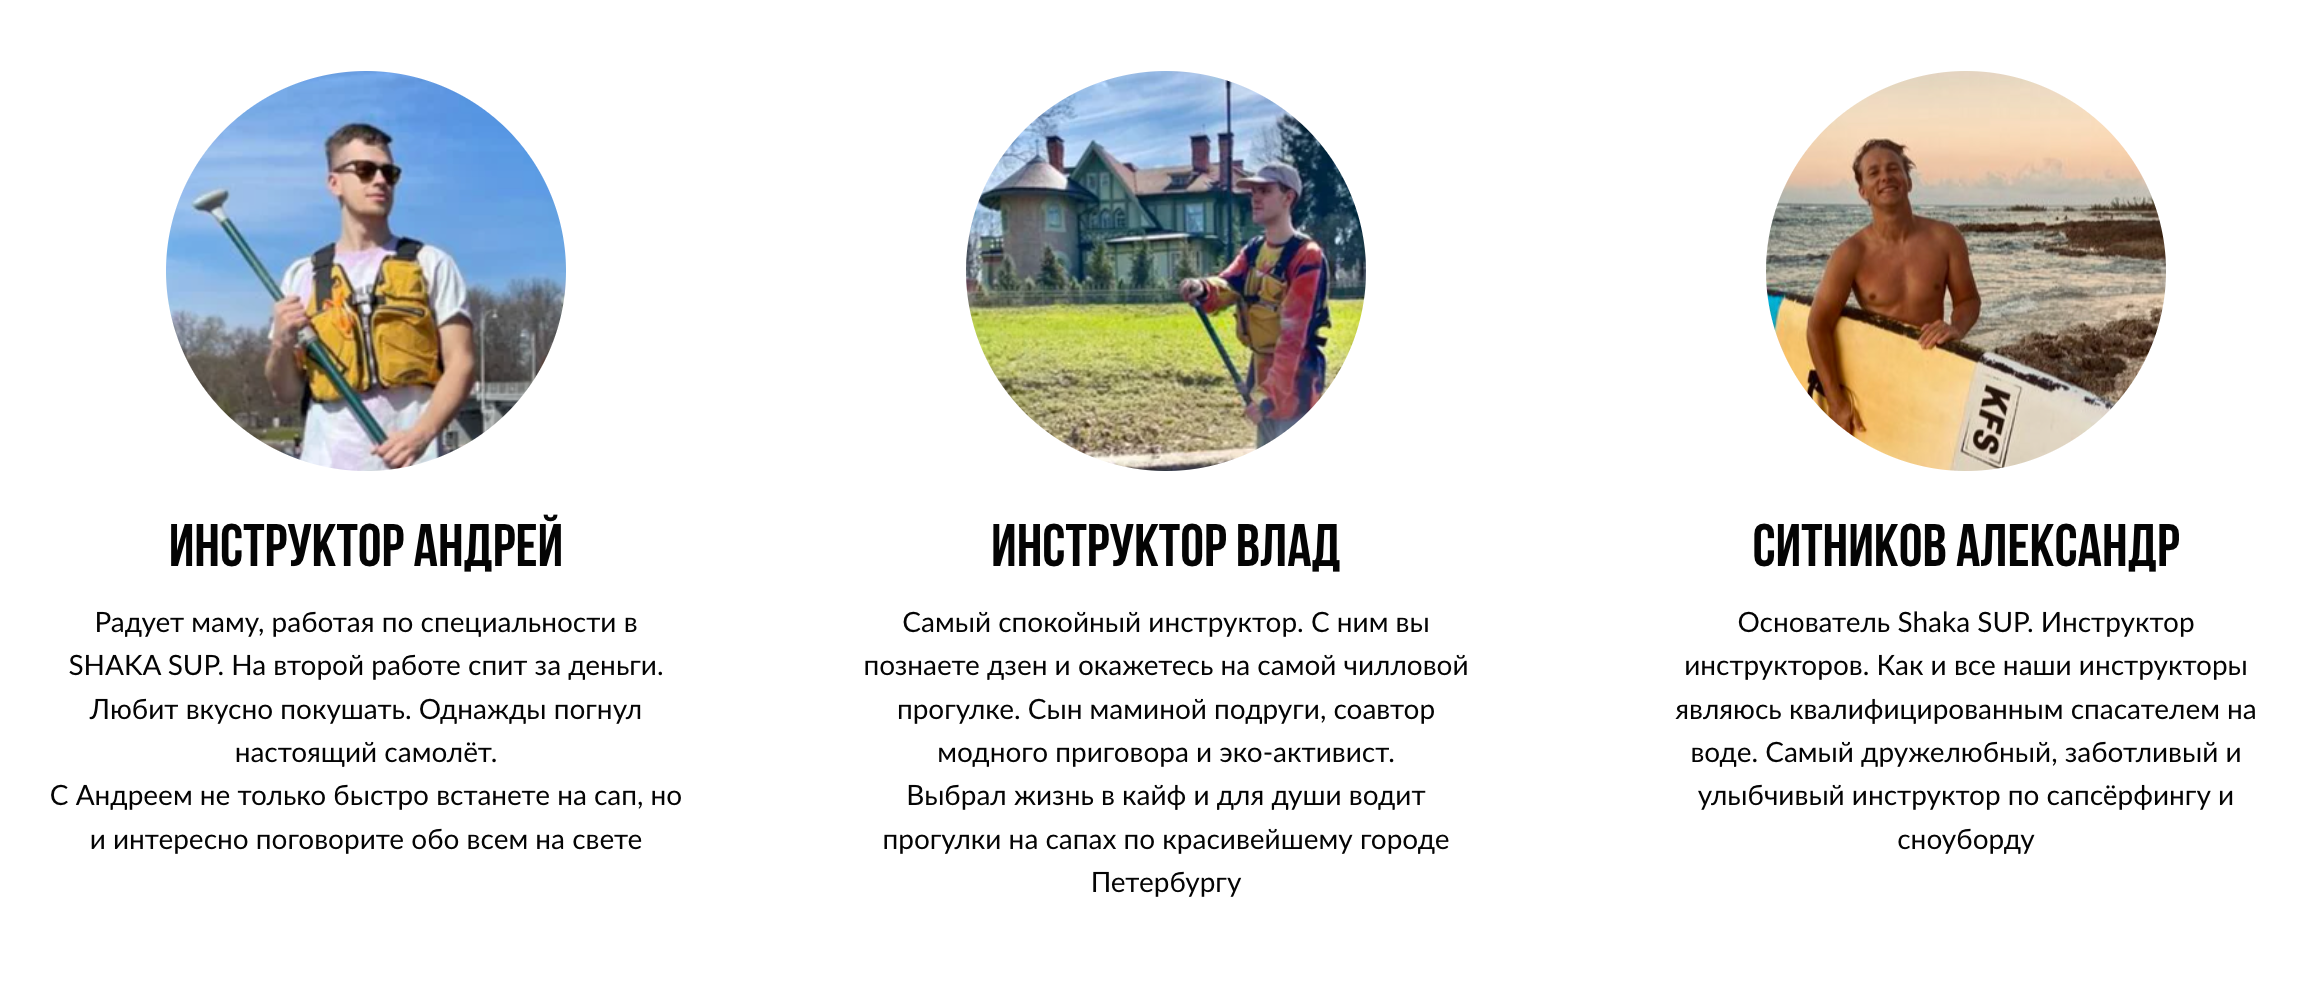 Информация об инструкторах на сайте Shaka Sup. Источник: shaka⁠-⁠sup.ru